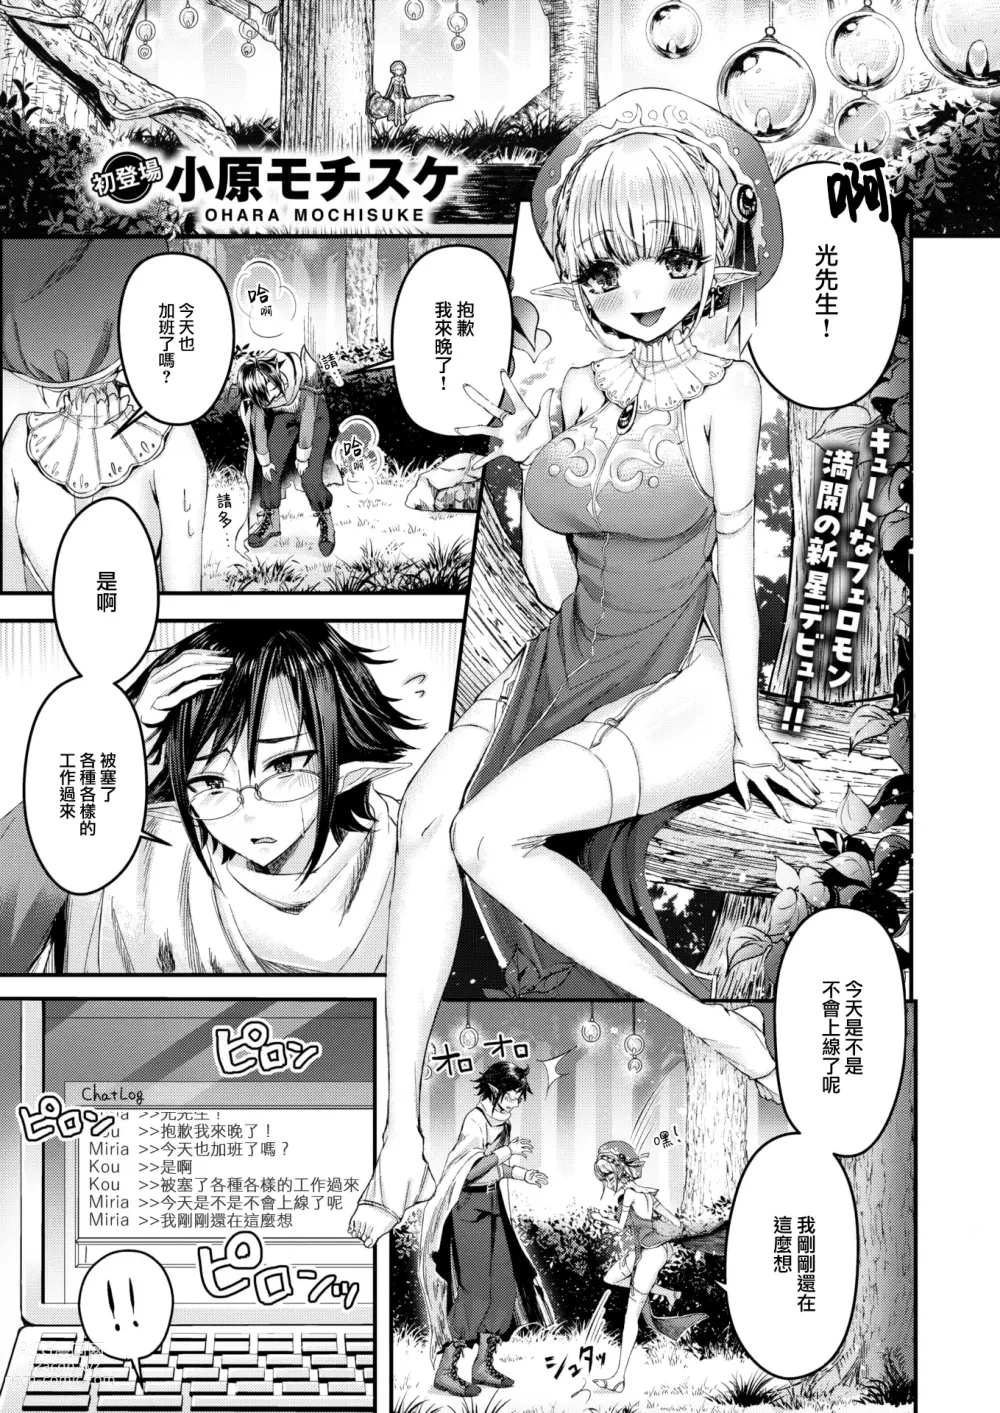 Page 2 of manga Iyasare Gaming Days